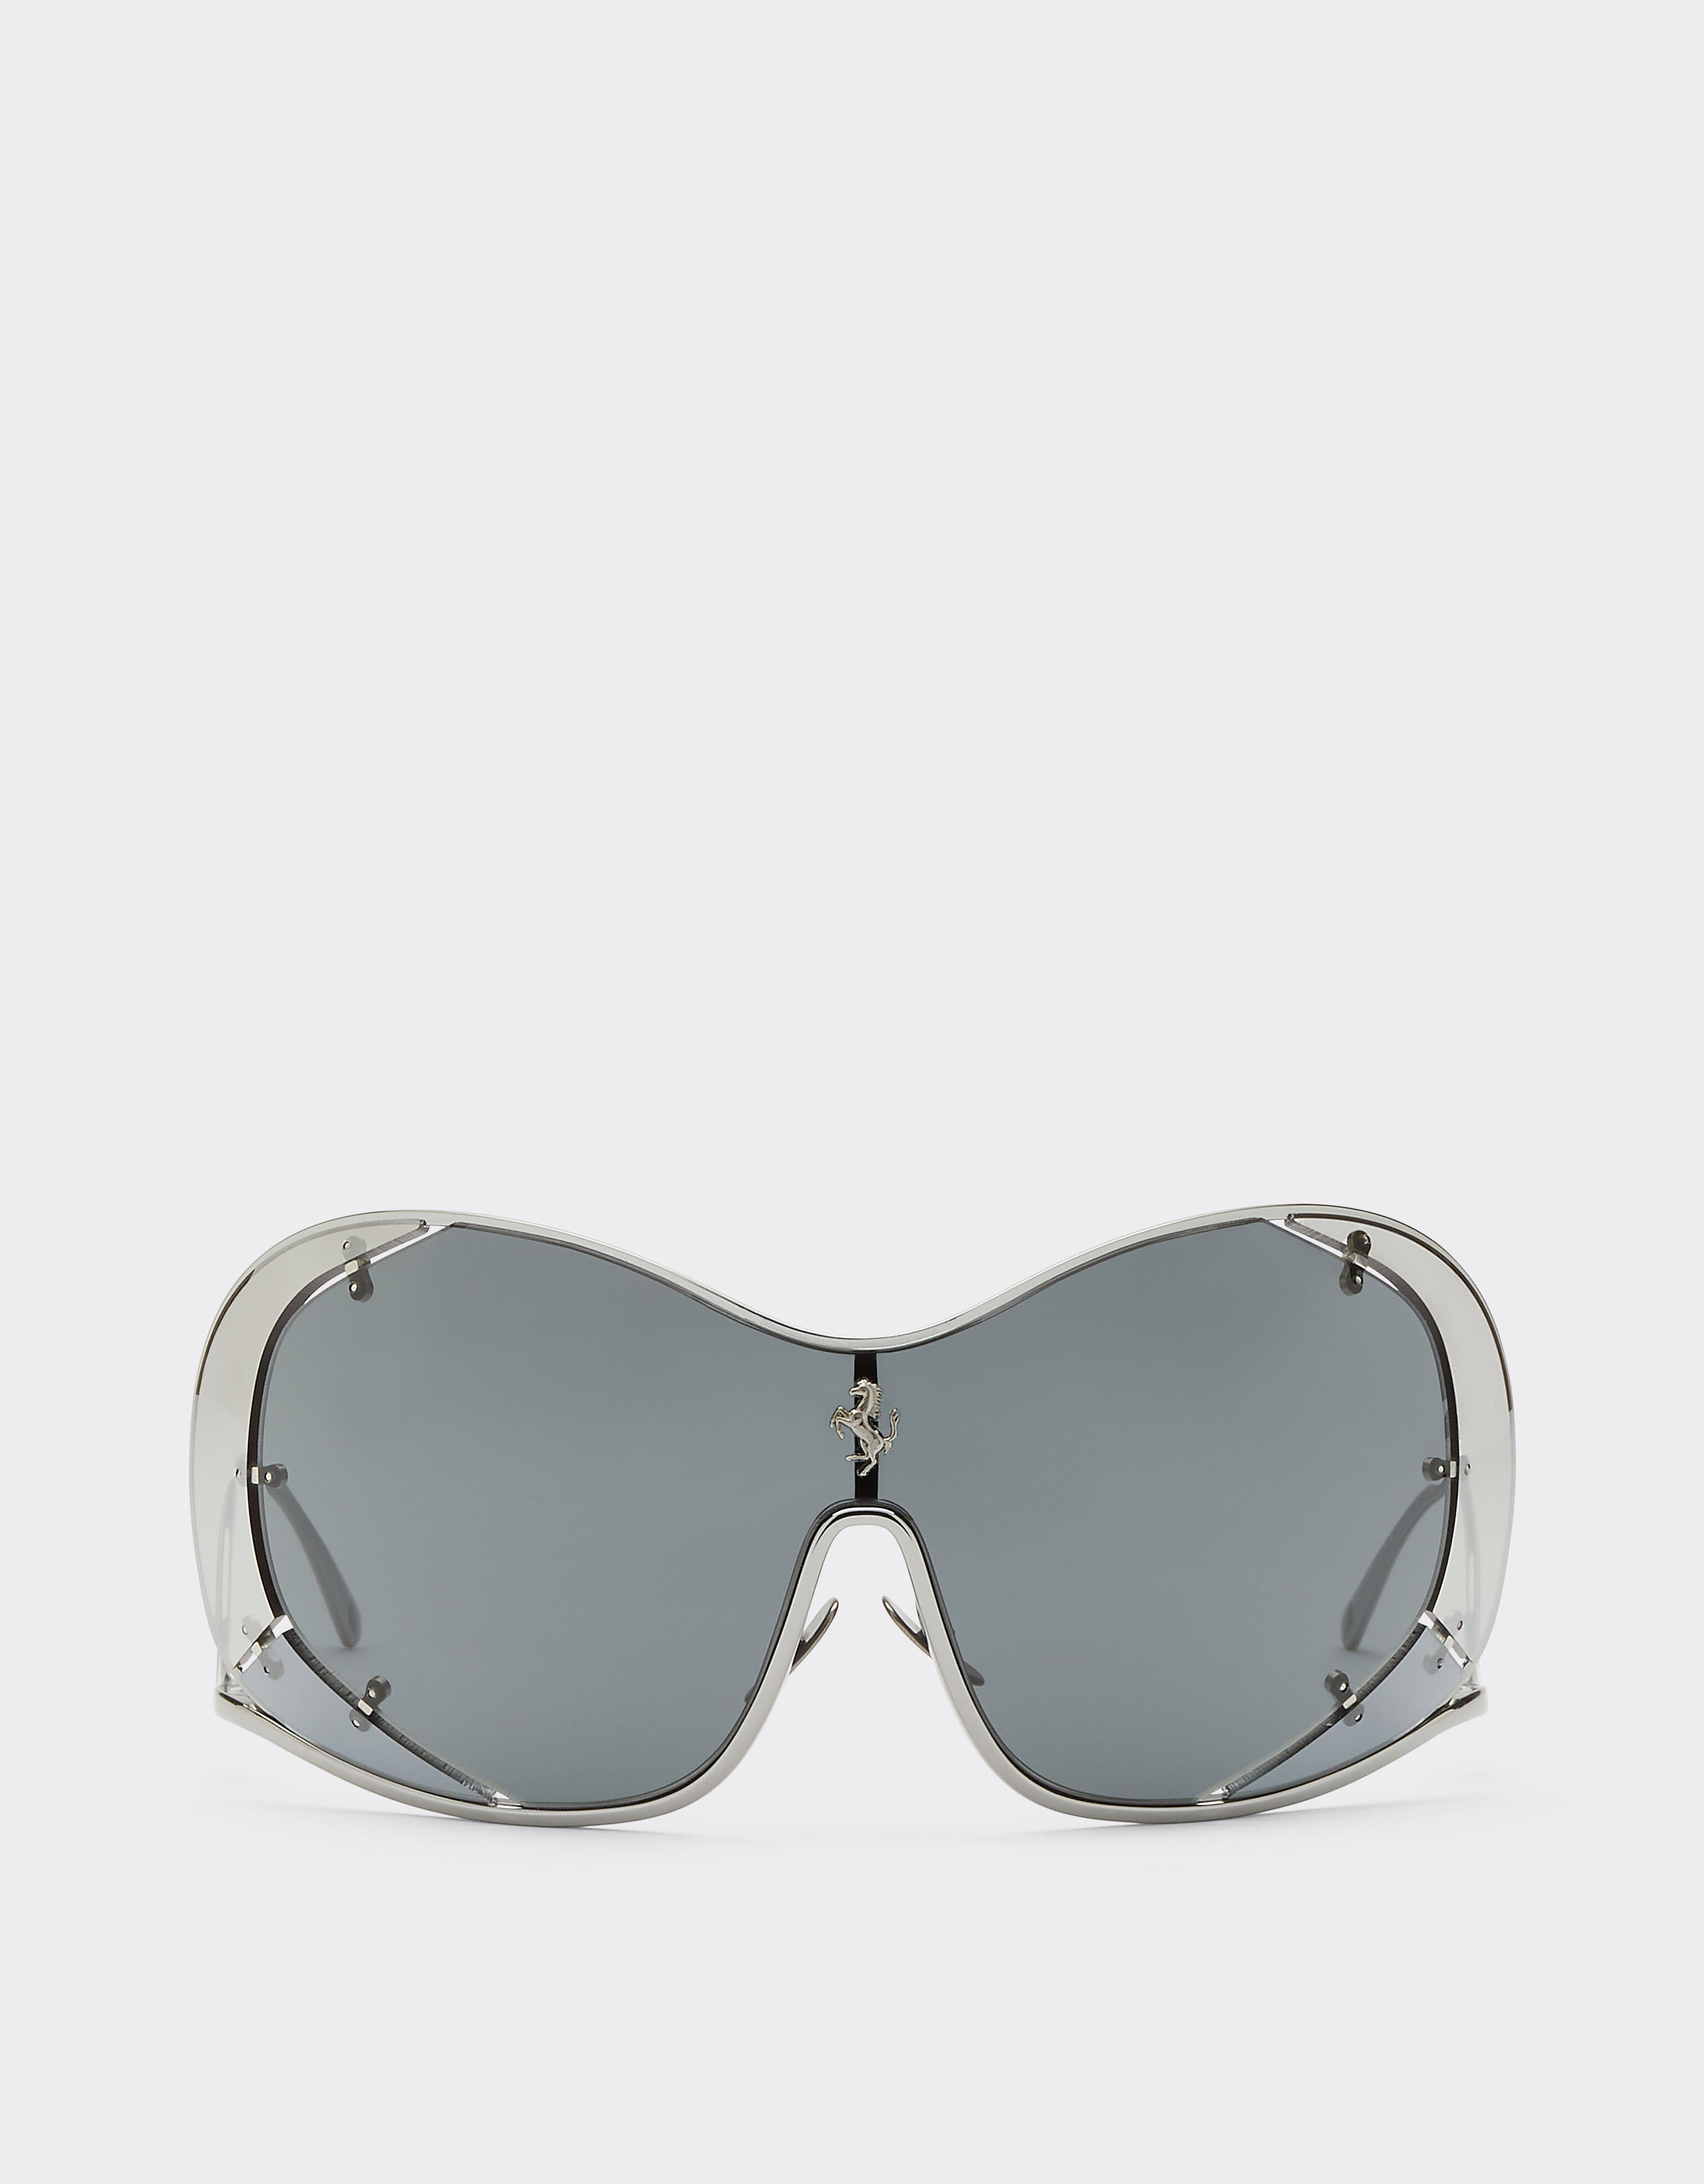 Ferrari Ferrari sunglasses with grey lenses Gold F0411f